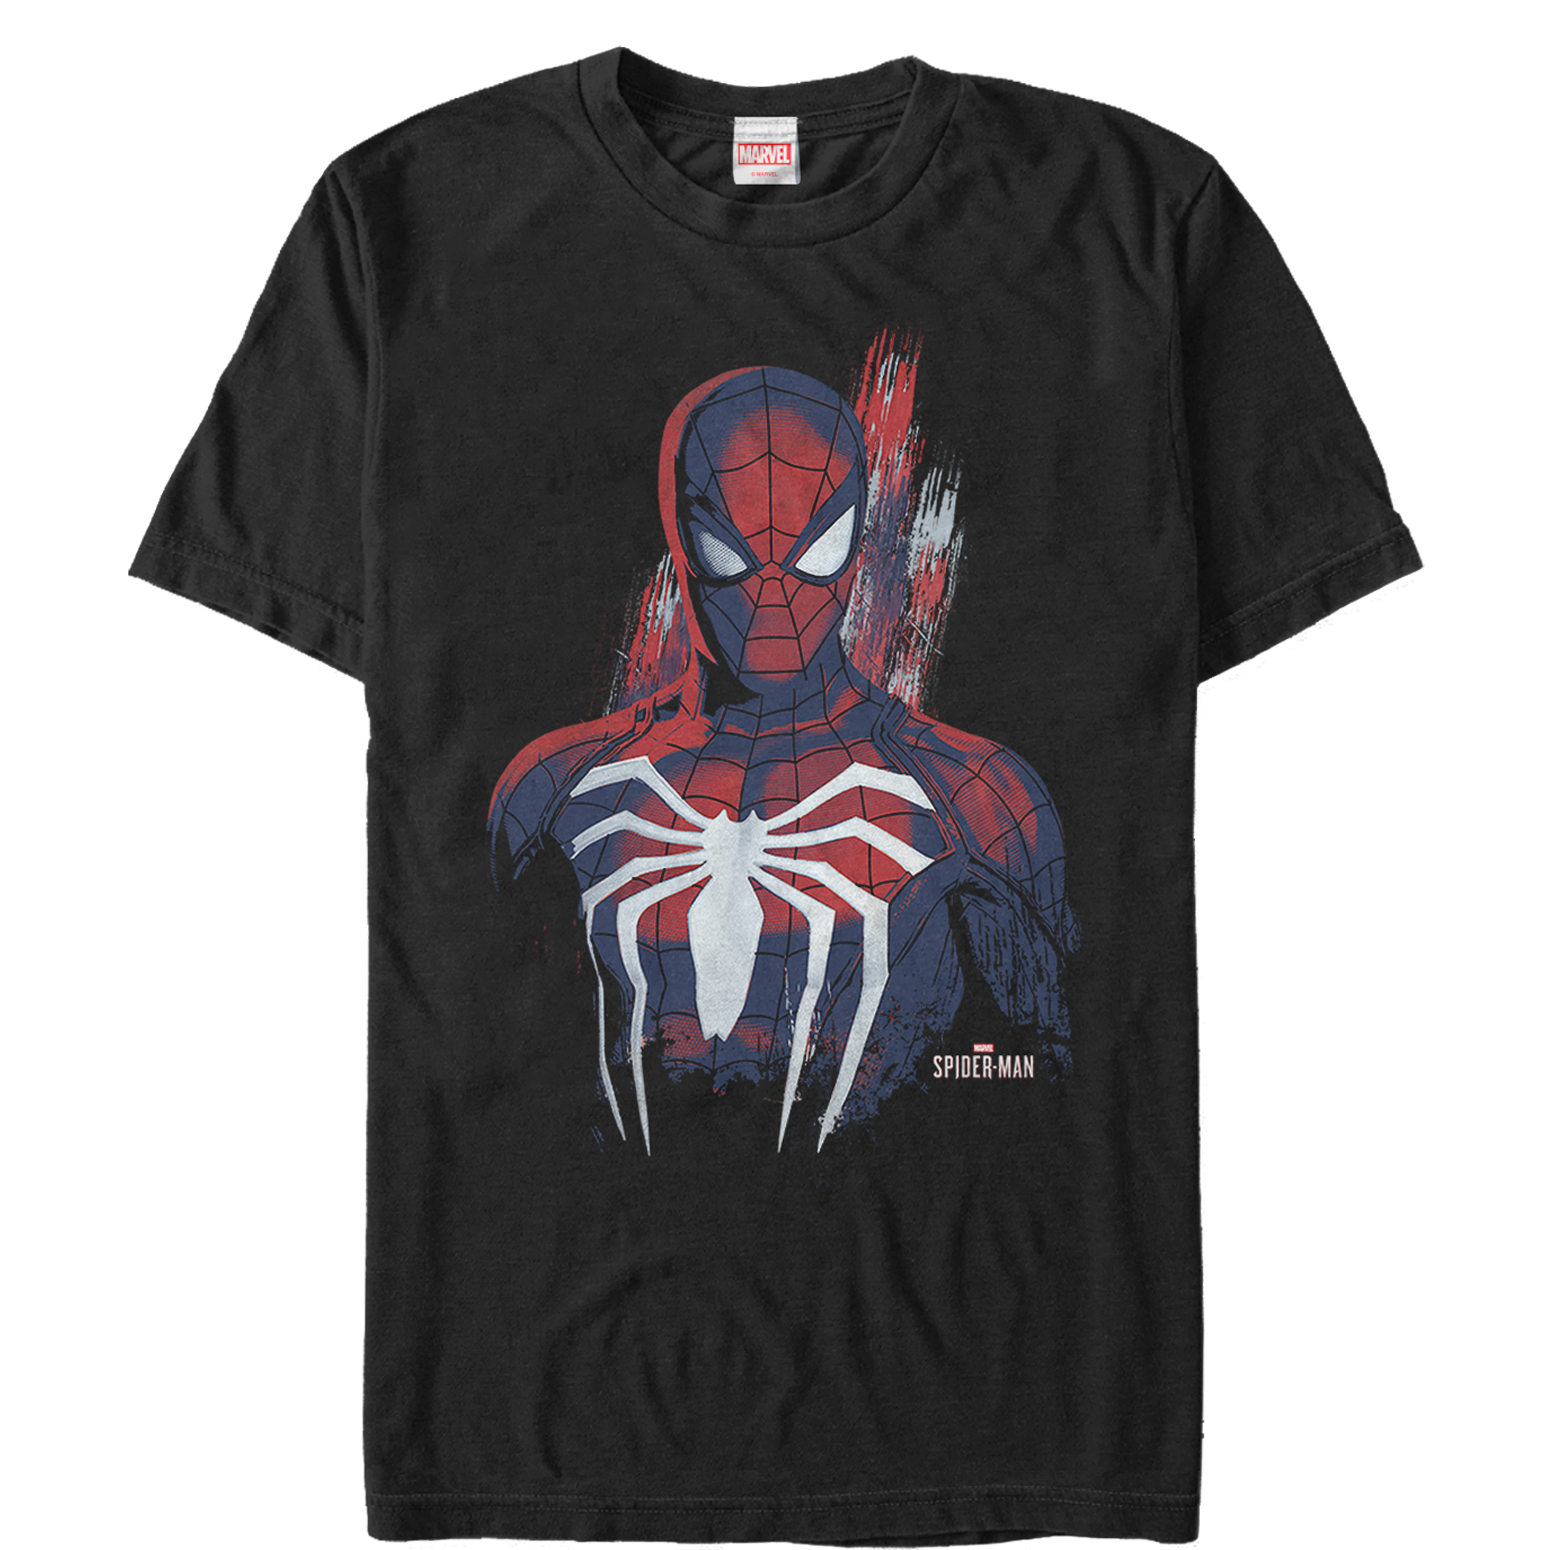 Men's Marvel Gamerverse Spider-Man Streak  Graphic Tee Black X Large - image 1 of 4